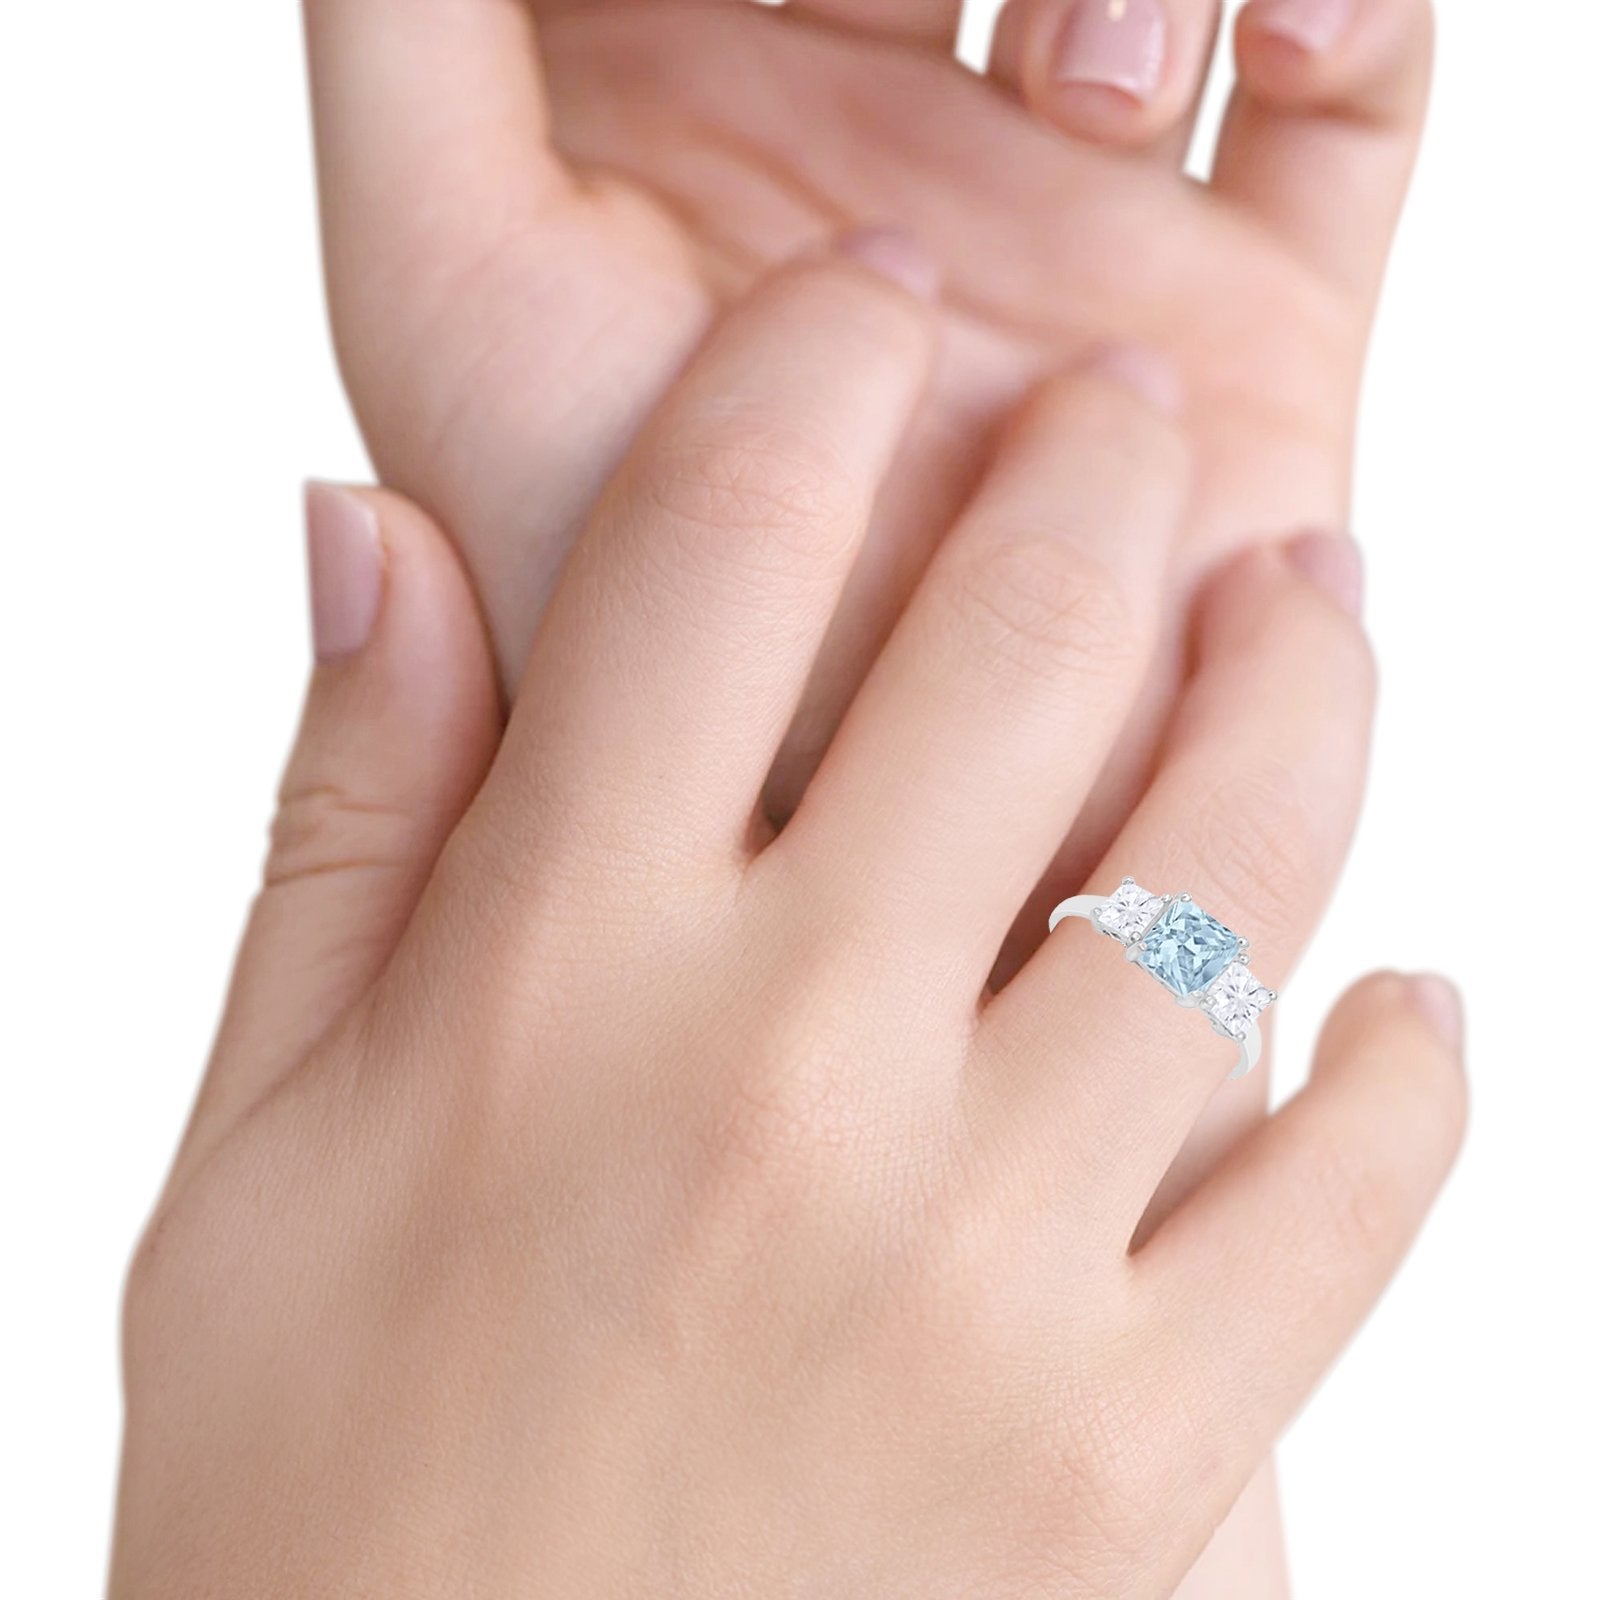 3 Stone Wedding Ring Princess Cut Simulated Aquamarine CZ 925 Sterling Silver